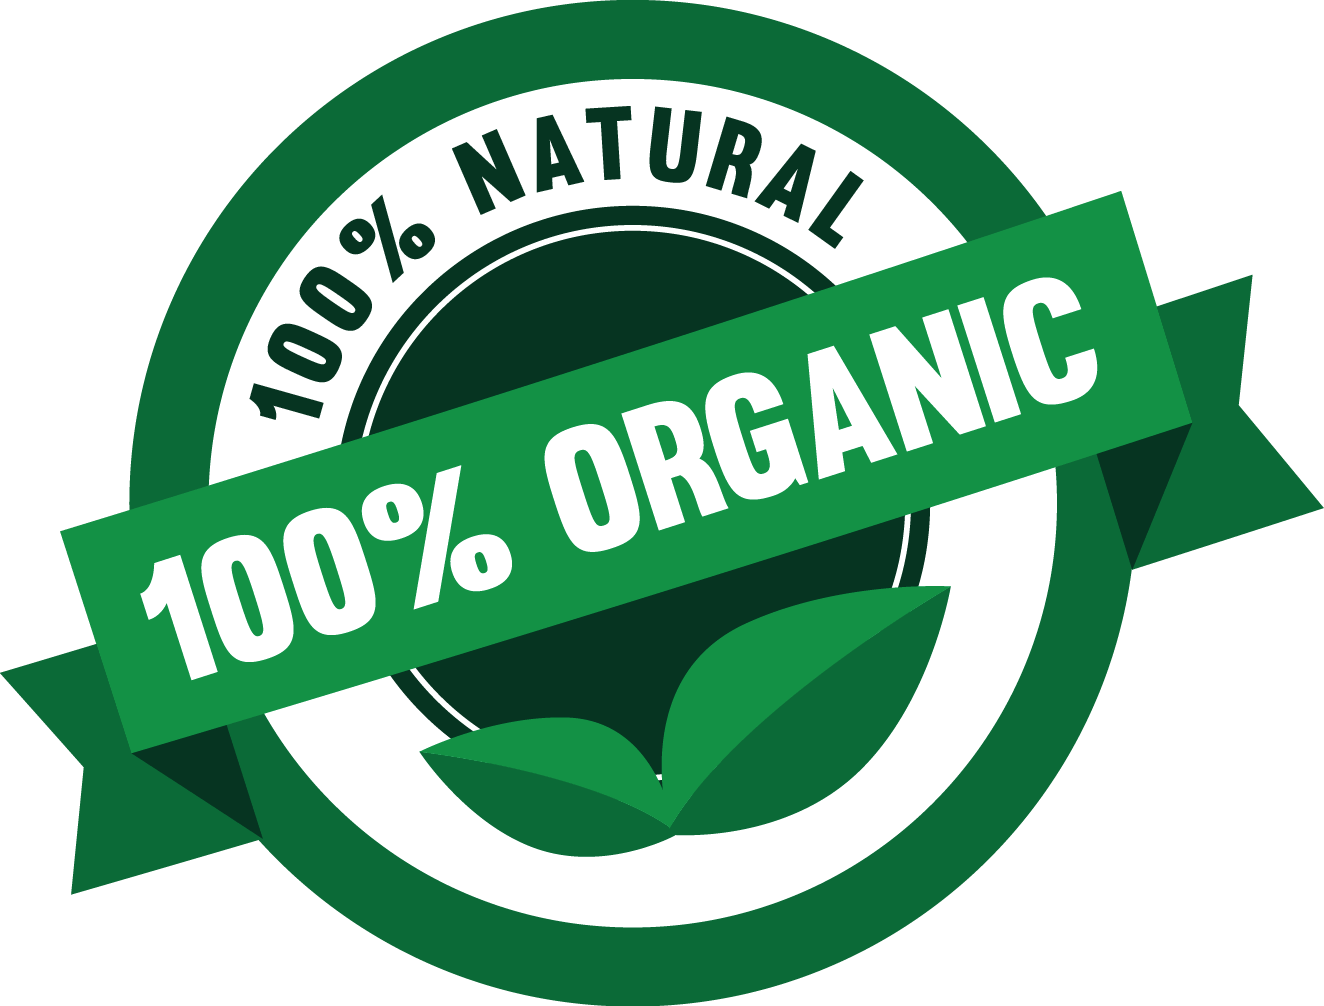 100% Organic natural logo png 41043